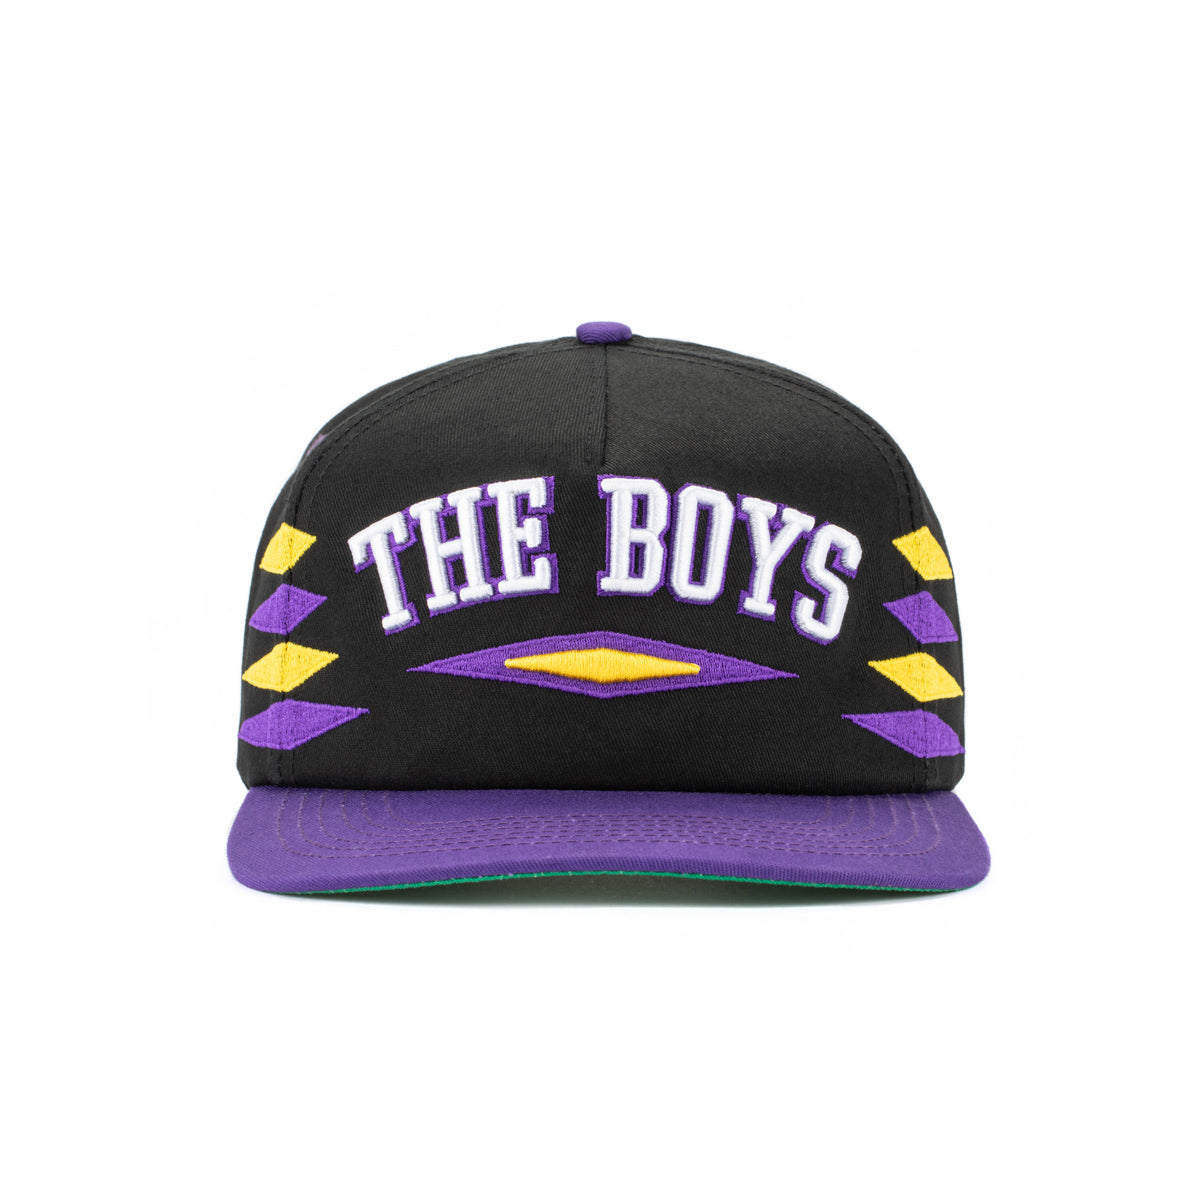 The Boys Diamond Retro Hat-Hats-Bussin With The Boys-Black/Purple-Barstool Sports